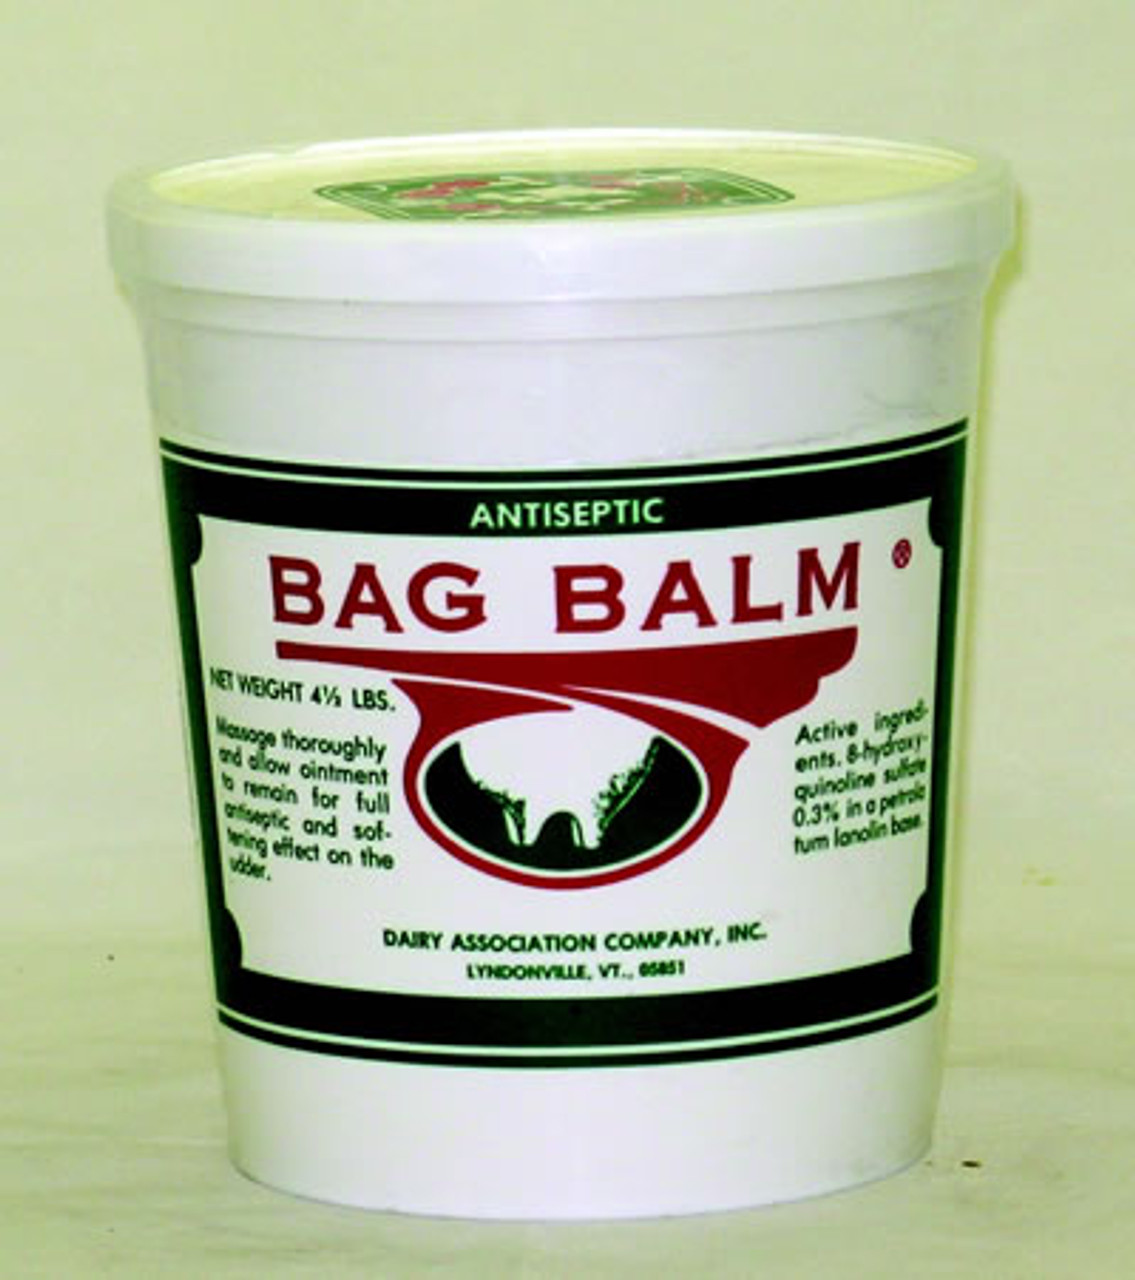 3 Pack Bag Balm Ointment for Chapped, Rough Skin 1 Oz Each - Walmart.com